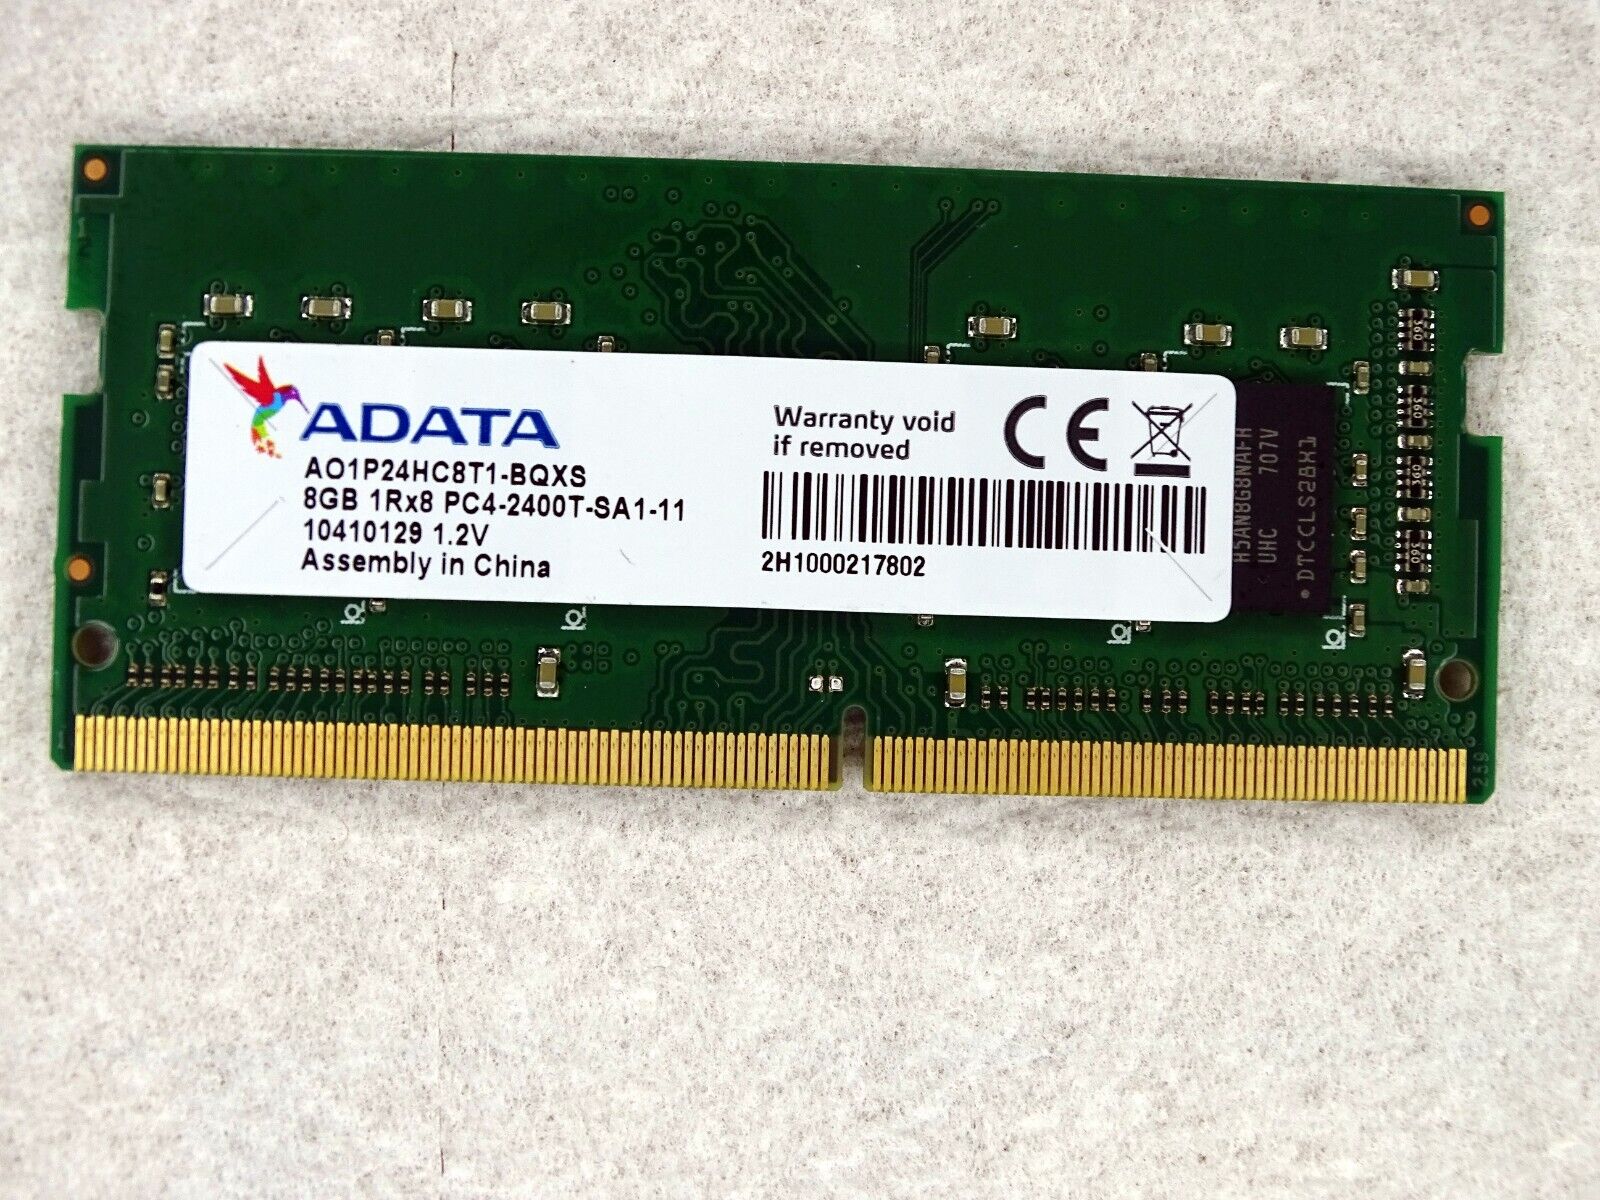 Adata 8GB PC4-19200 DDR4-2400 Laptop Memory RAM AO1P24HC8T1-BQXS